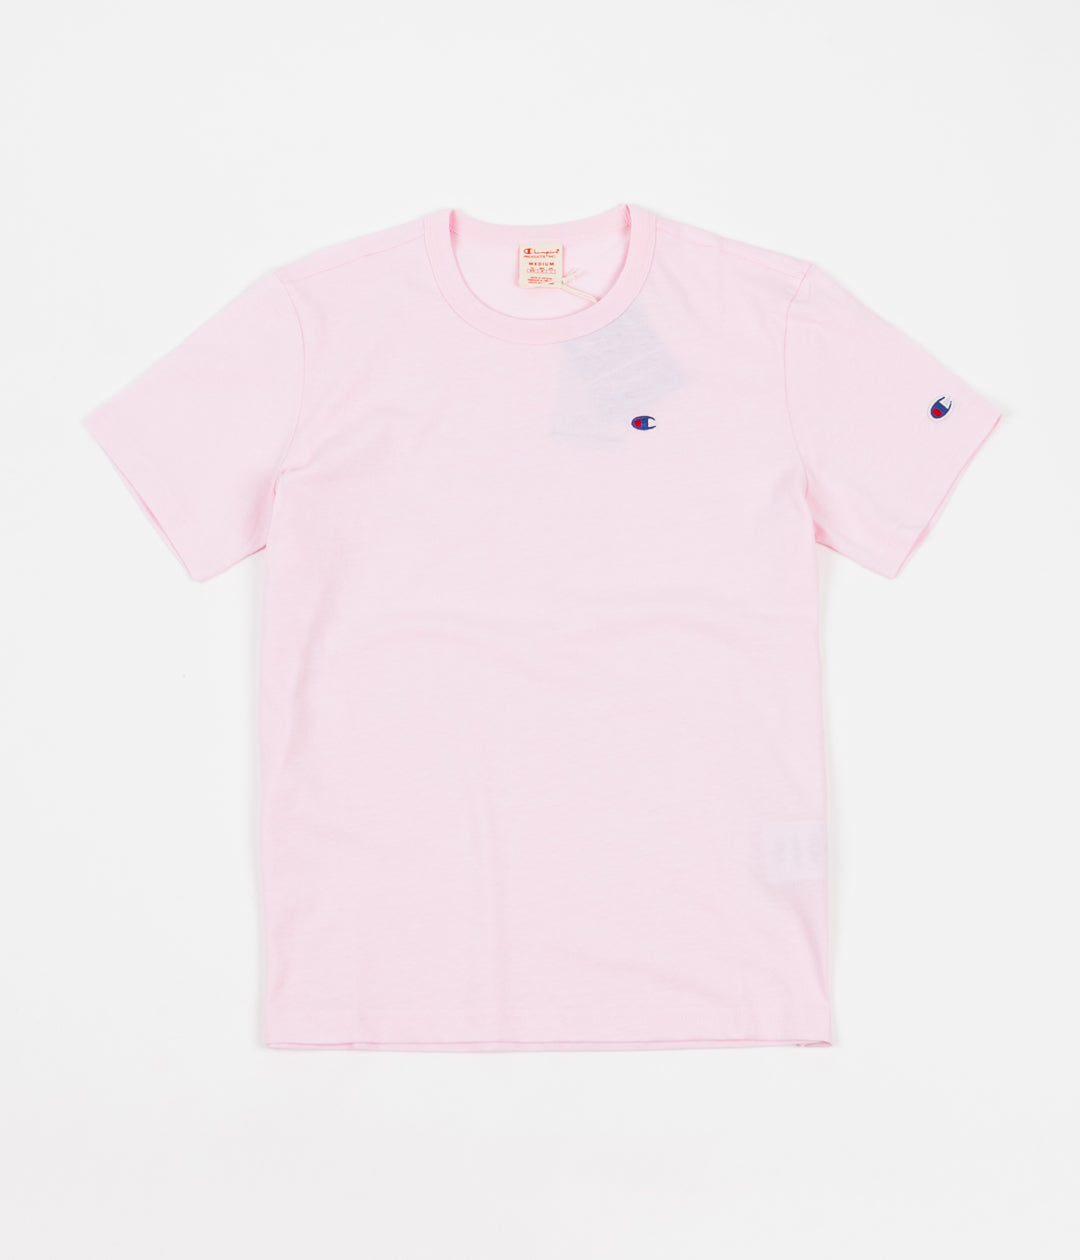 champion pink shirt